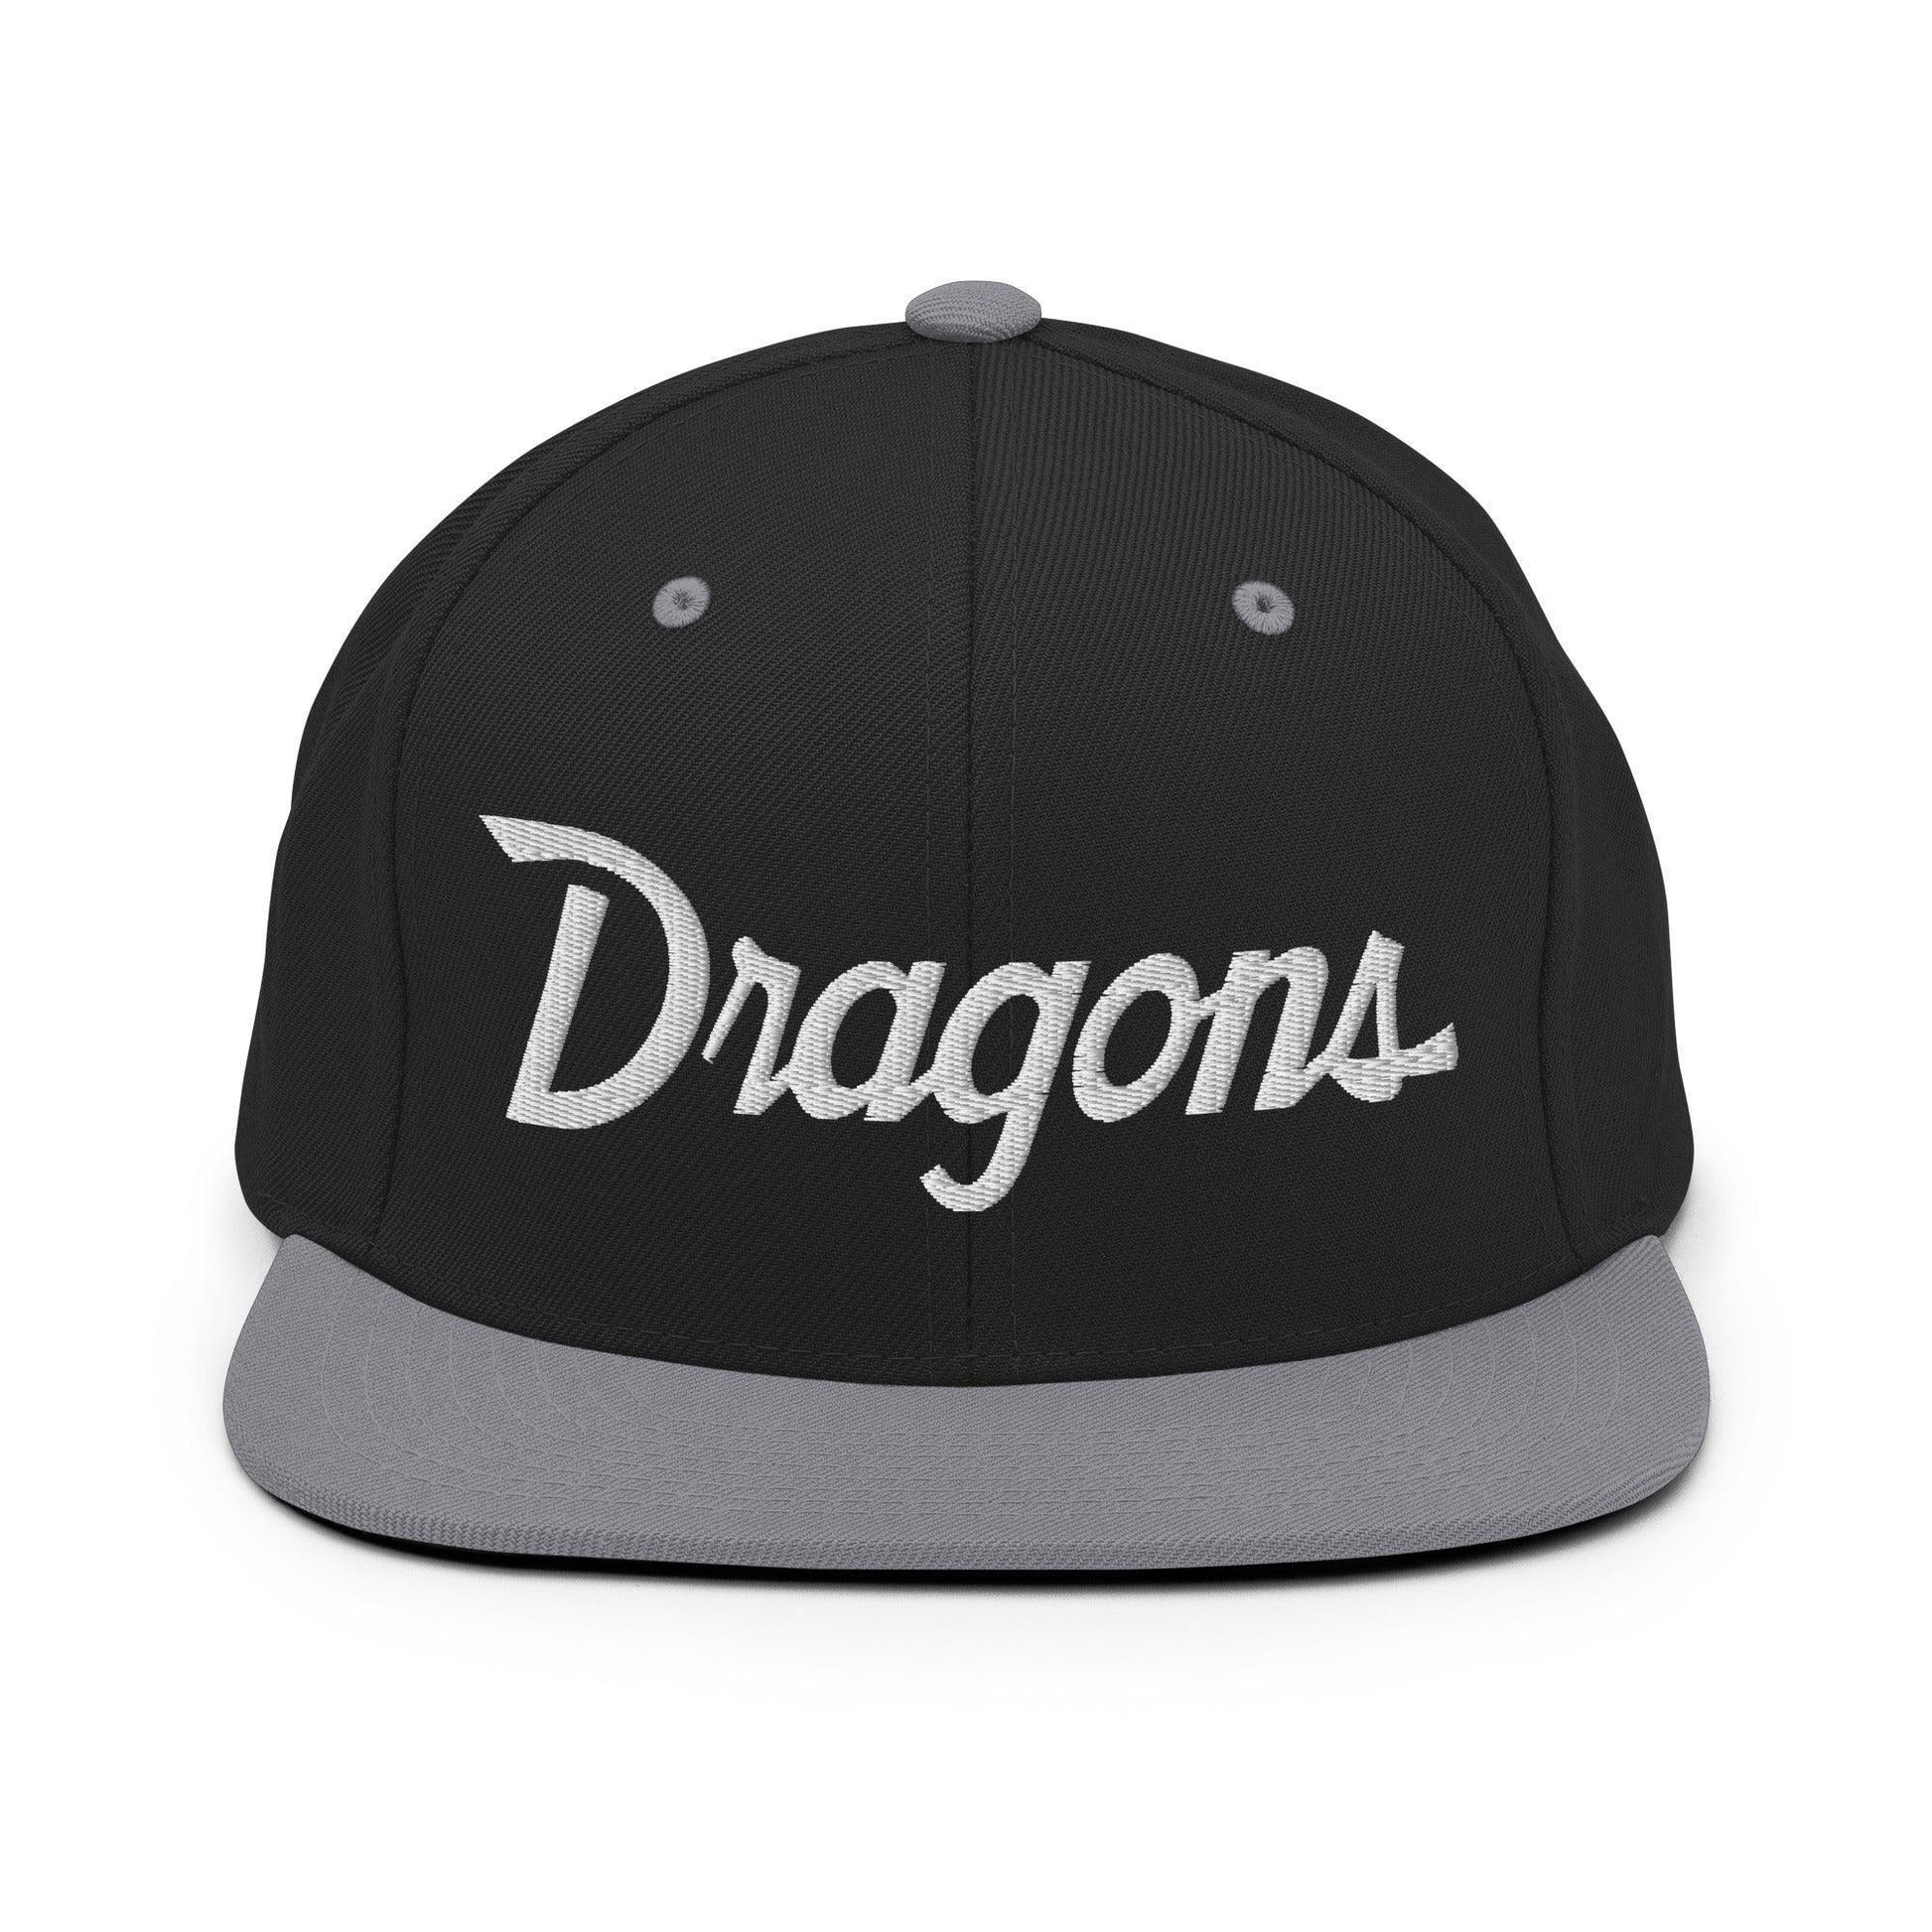 Dragons School Mascot Snapback Hat Black/ Silver